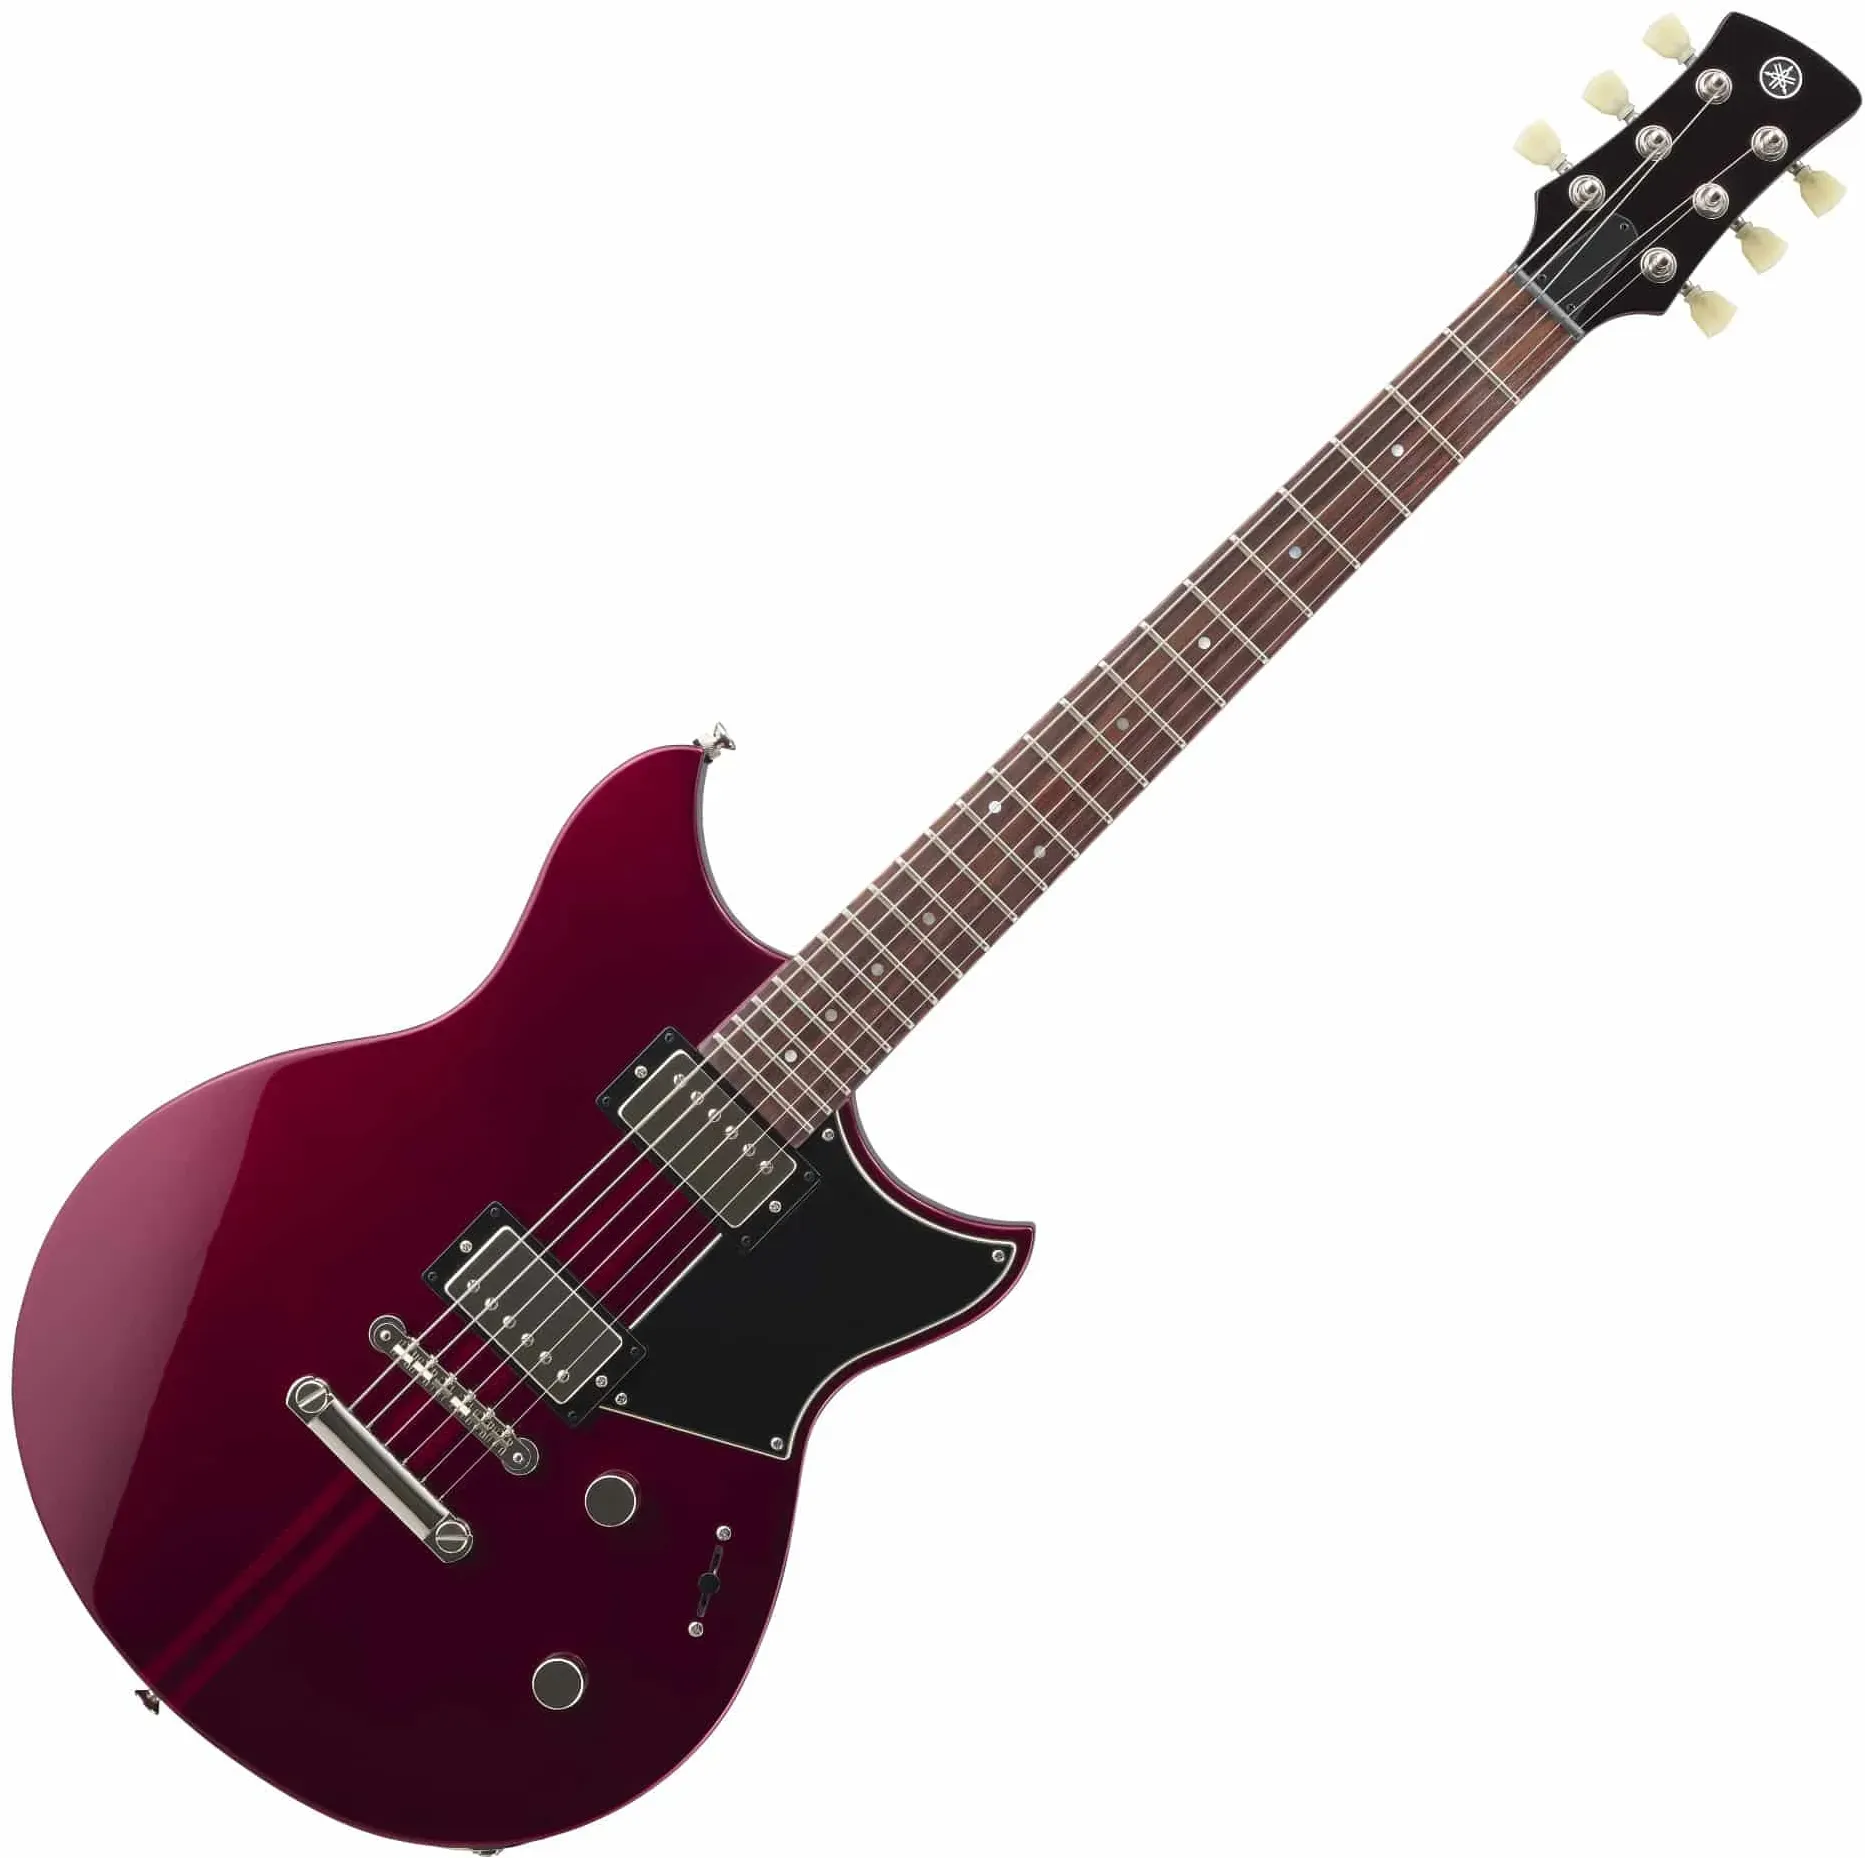 Yamaha RSE20 RCP Revstar Element E-Gitarre Red Copper